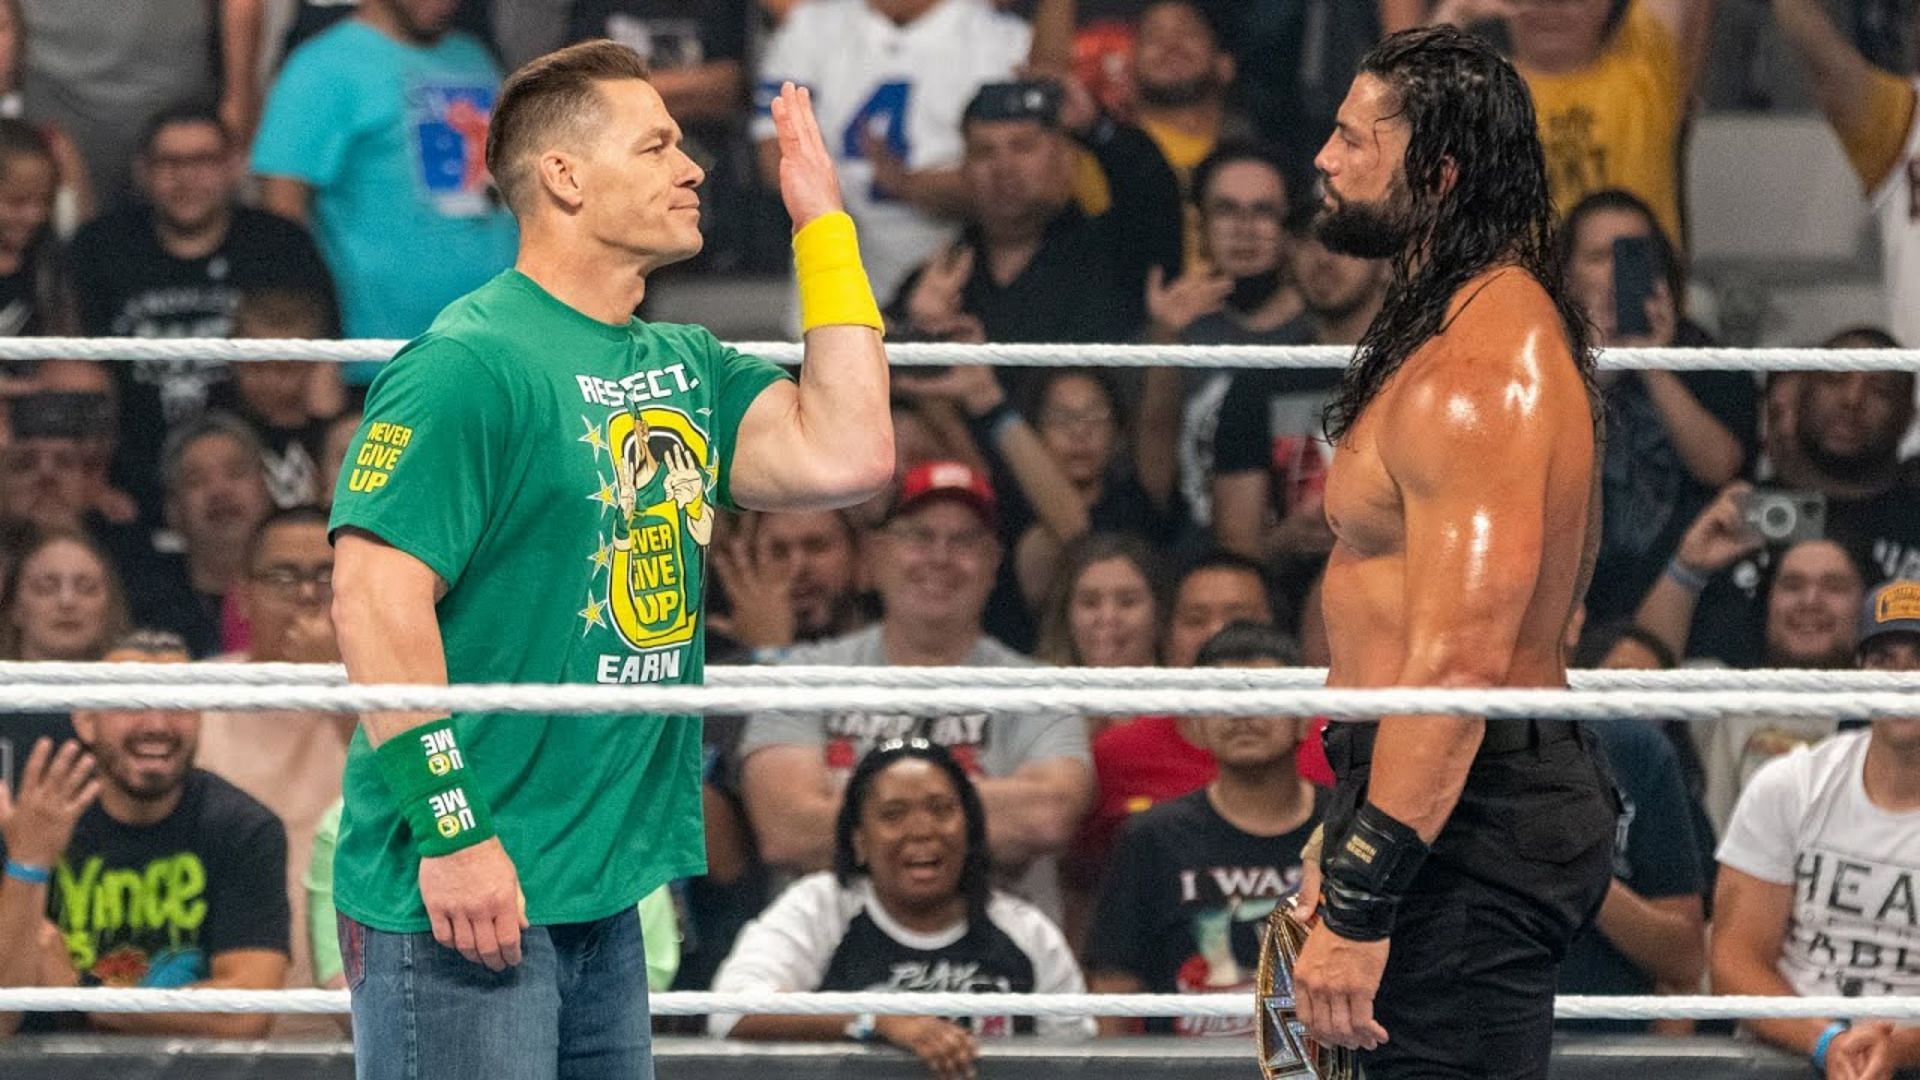 John Cena praises the Undisputed WWE Universal Champion Roman Reigns